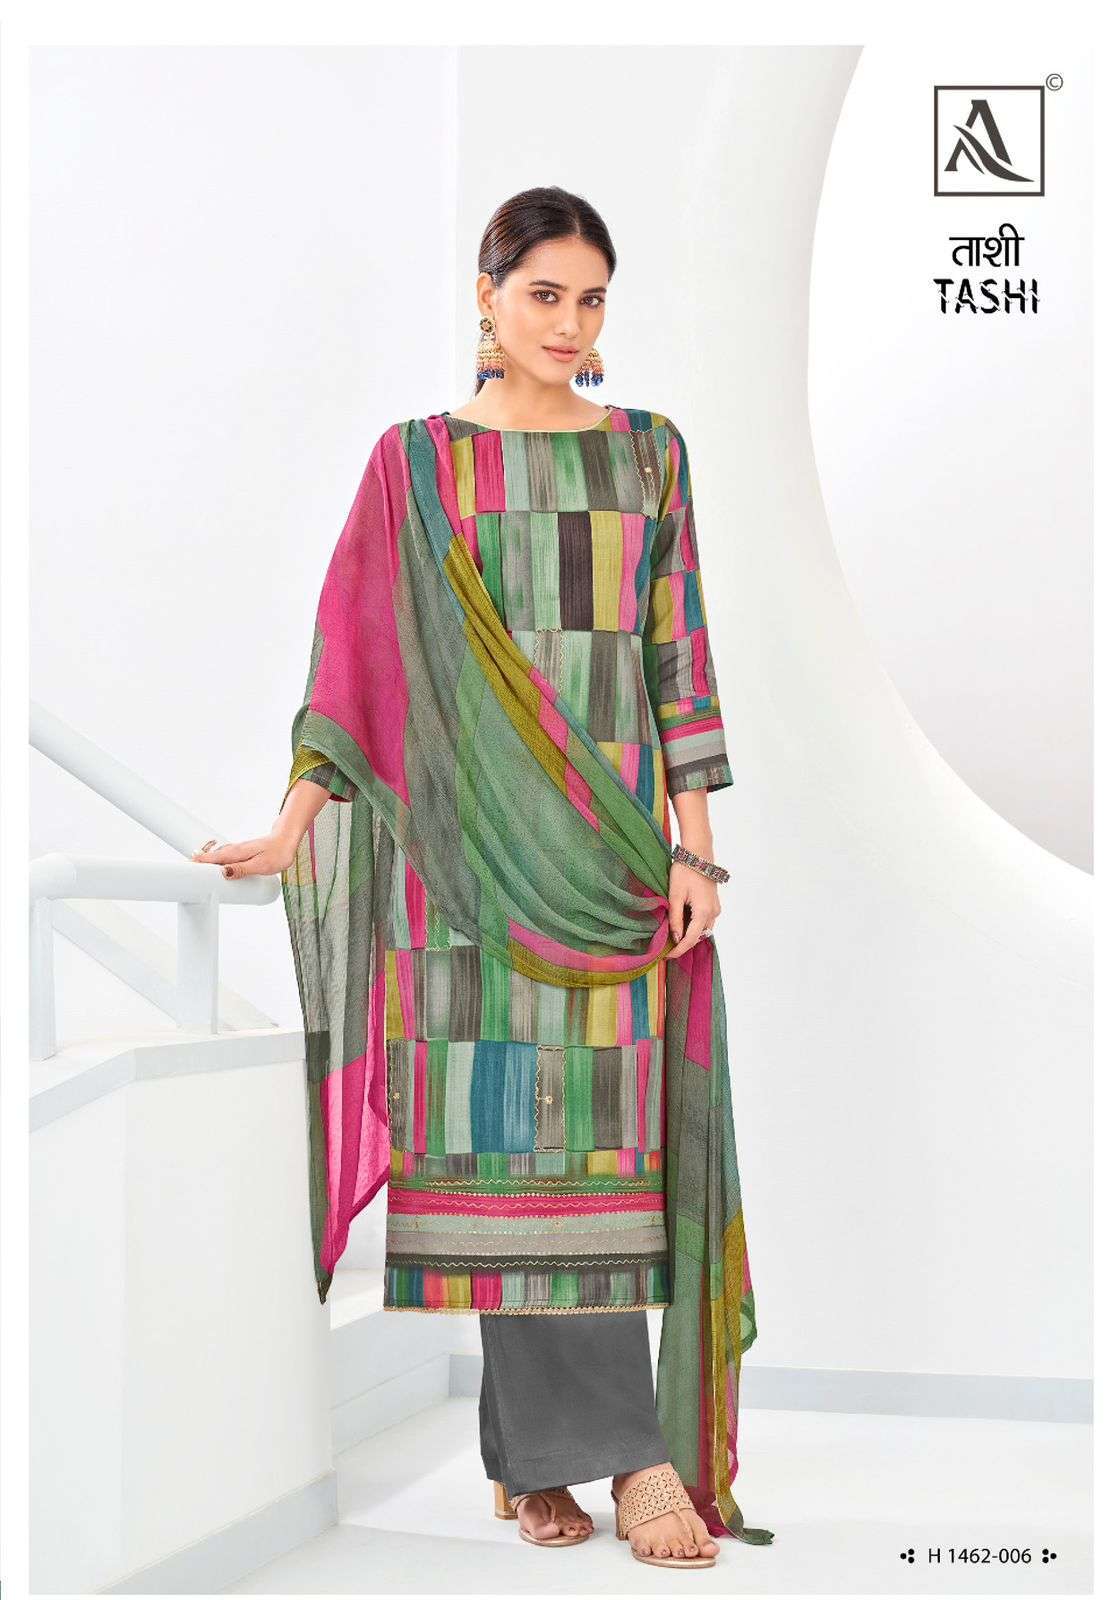 Alok Tashi Premium Cotton Designer wholesale ethnic wear suppliers